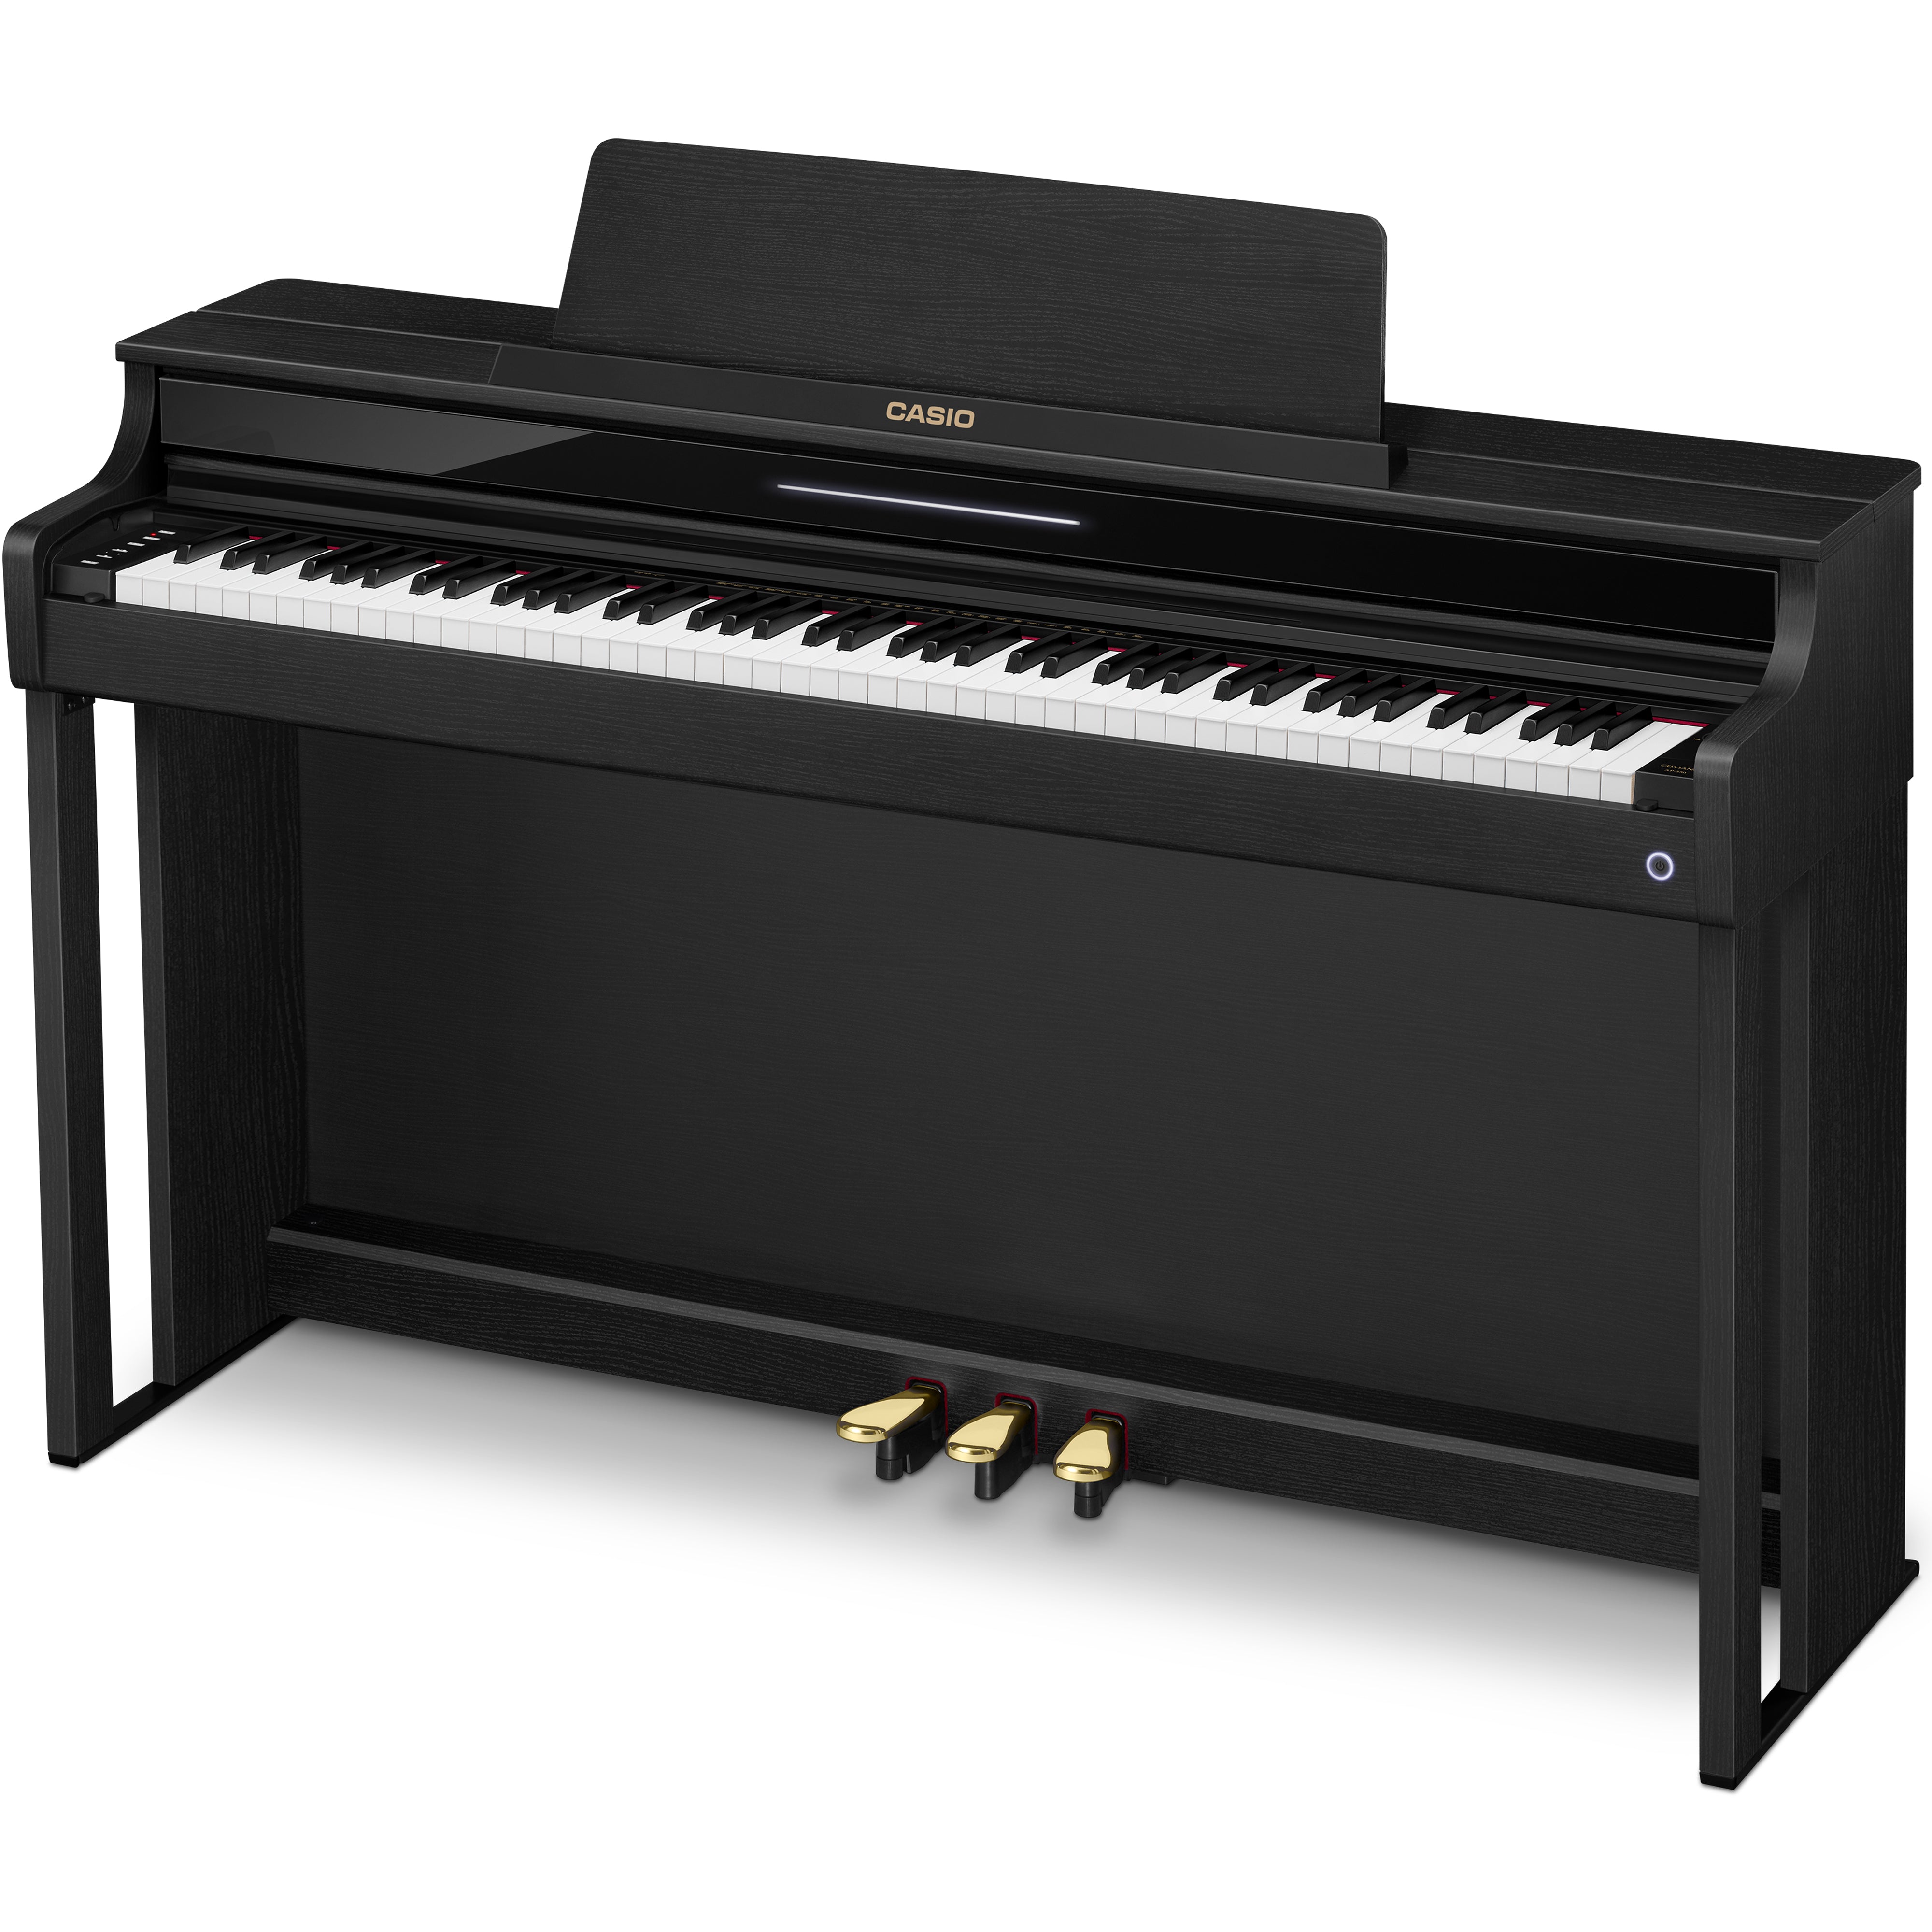 Casio Celviano AP-550 Digital Piano - BlackCasio Celviano AP-550 Digital Piano - Black - facing left